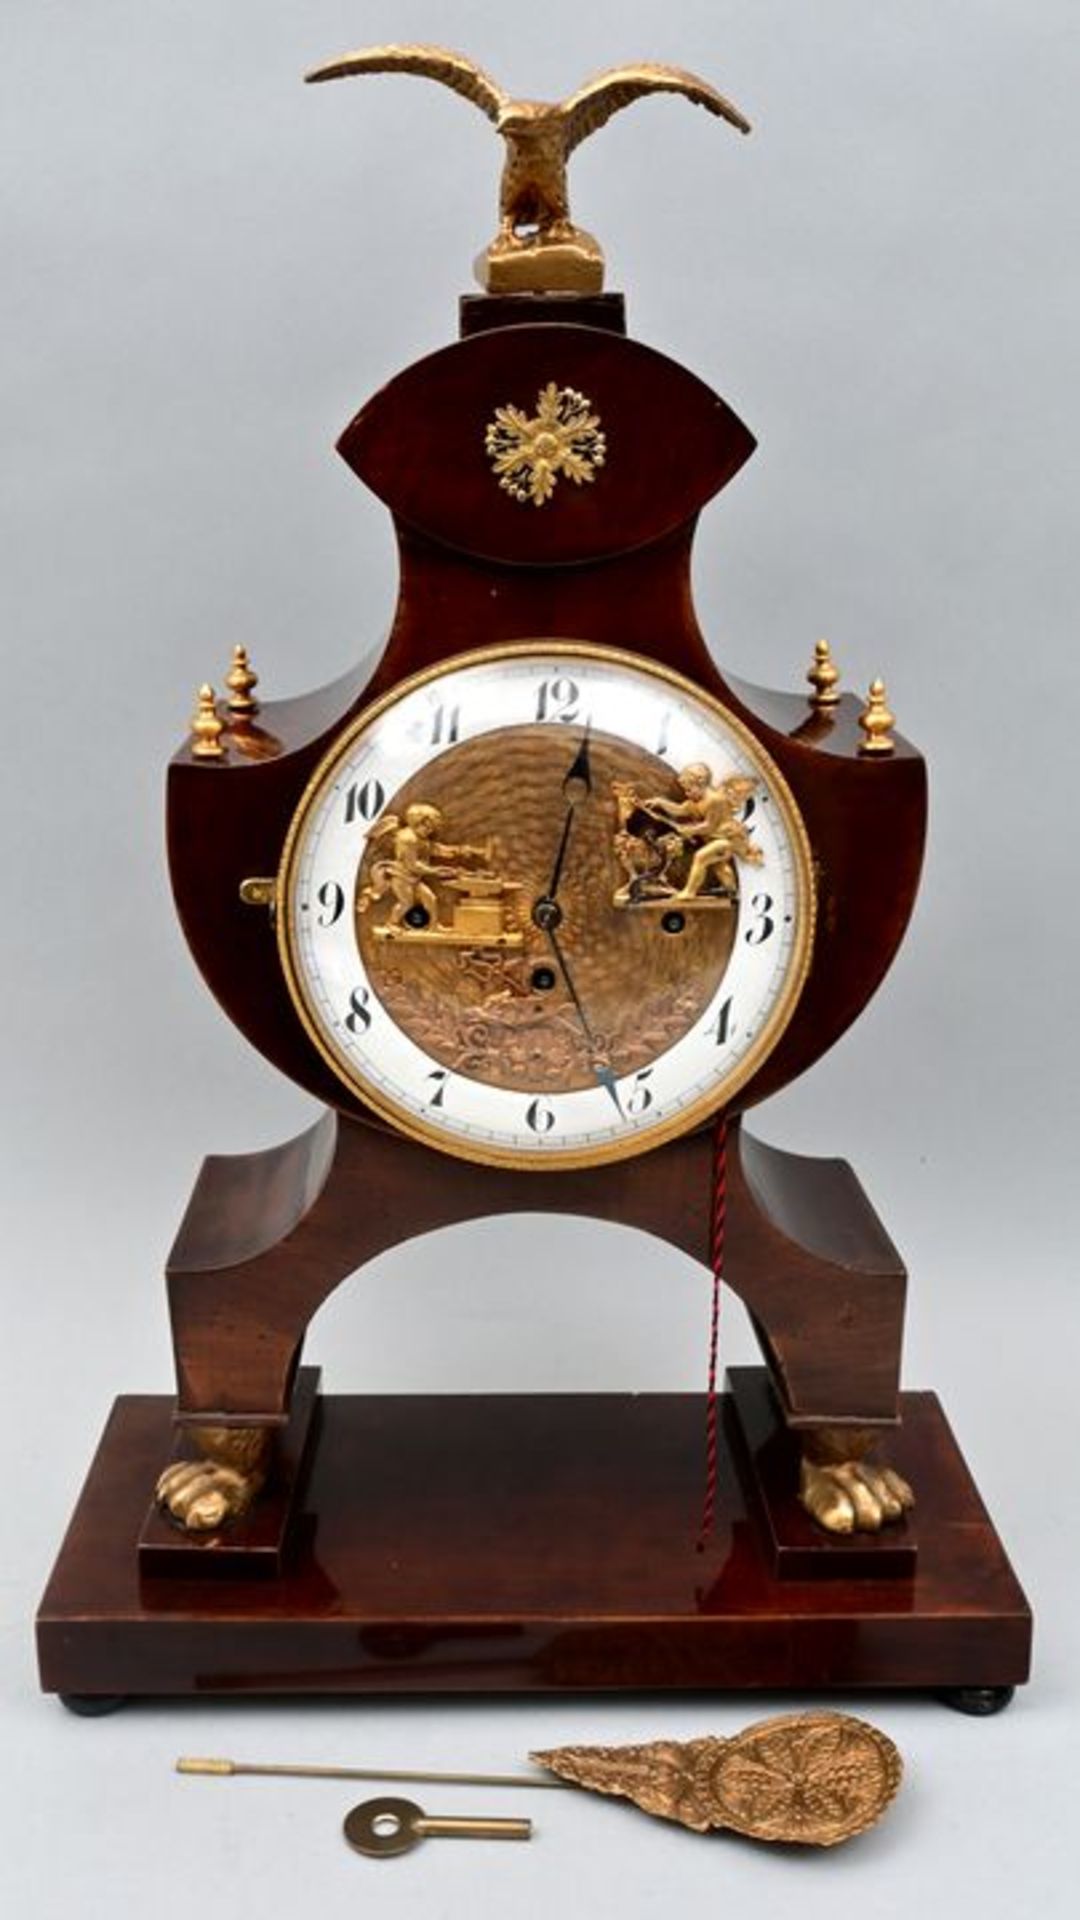 962 Stutzuhr Kossek Prag / Table clock Prague - Bild 2 aus 8